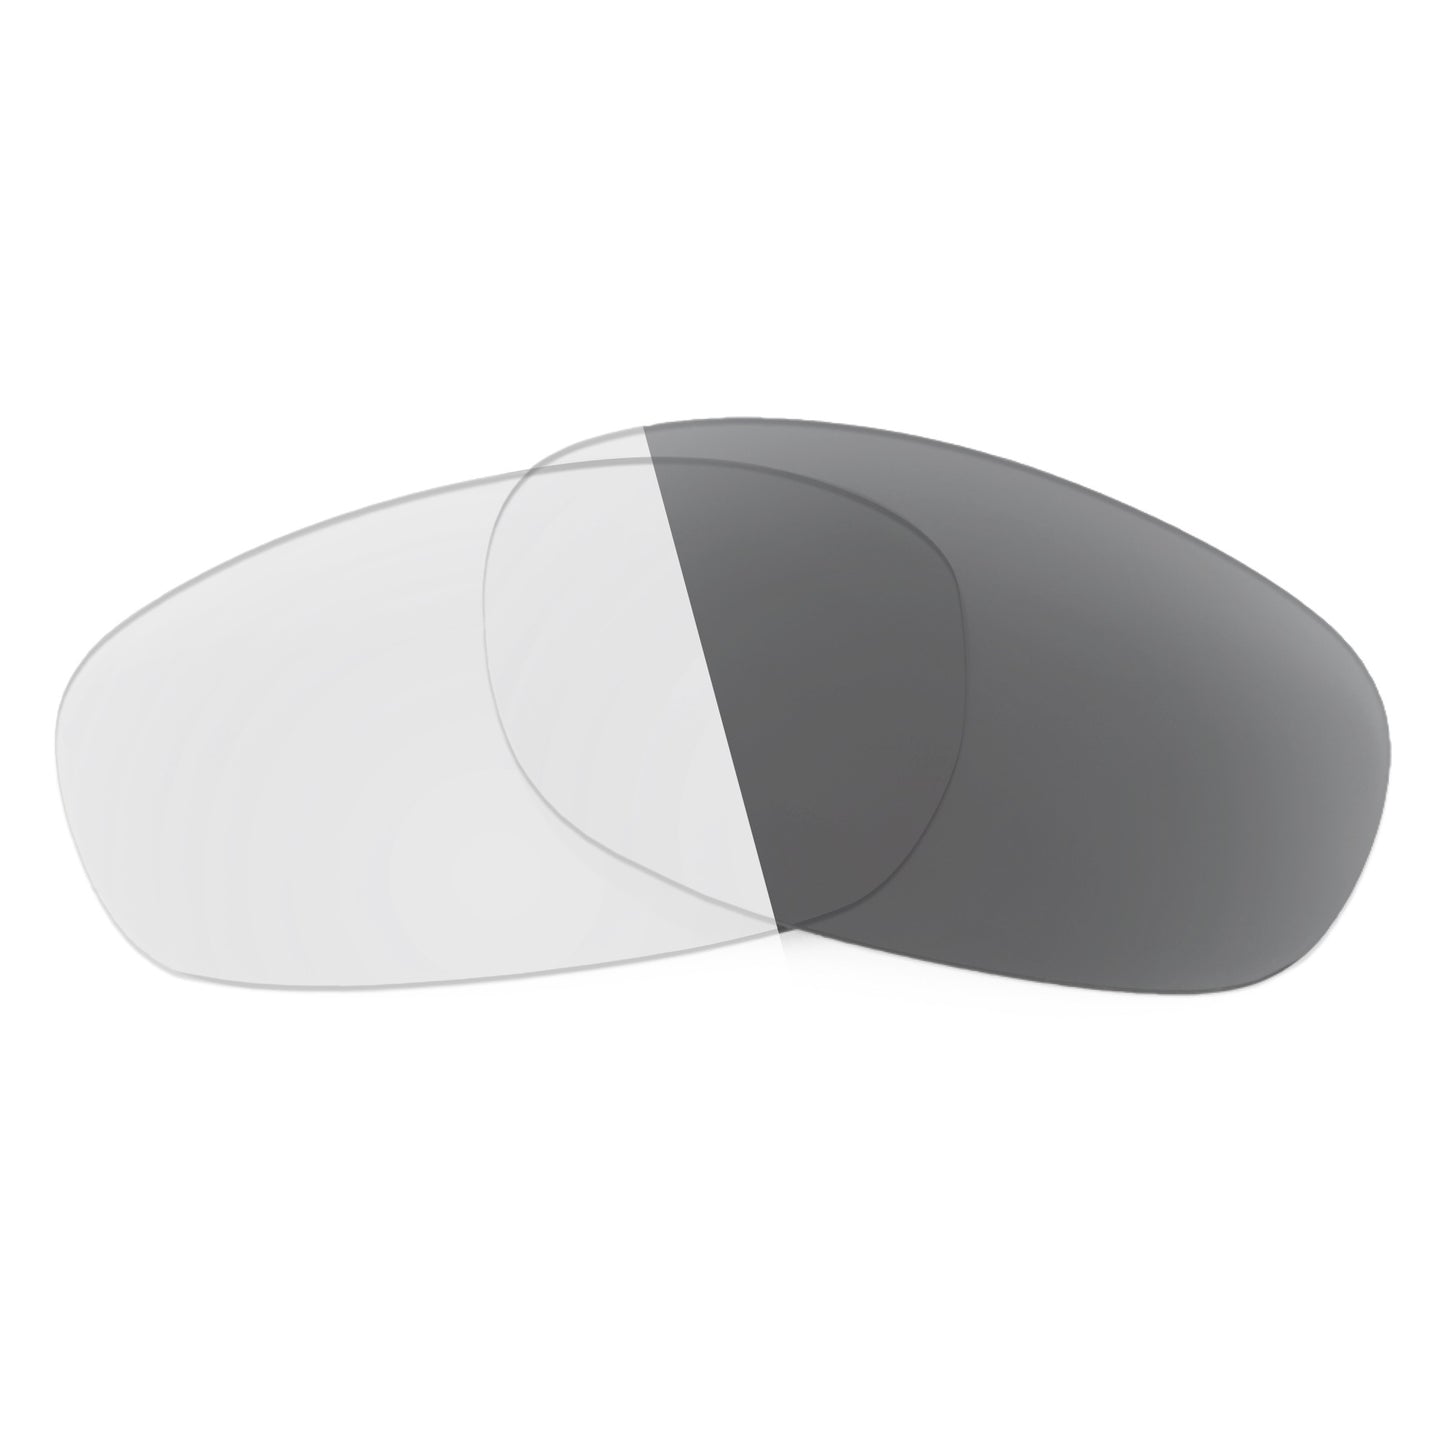 Revant replacement lenses for Maui Jim Riptide MJ126 Non-Polarized Adapt Gray Photochromic